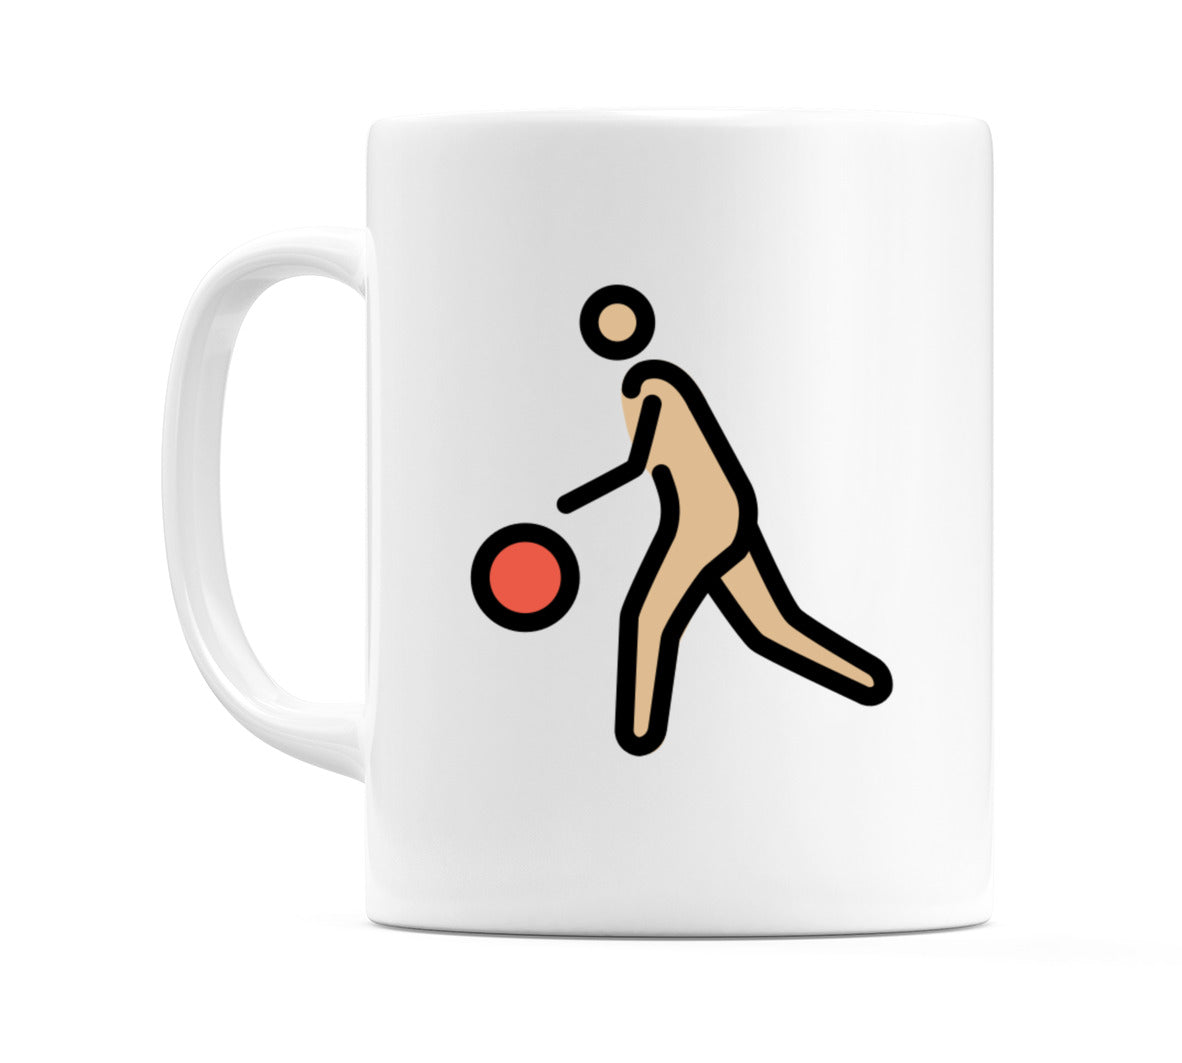 Male Bouncing Ball: Medium-Light Skin Tone Emoji Mug